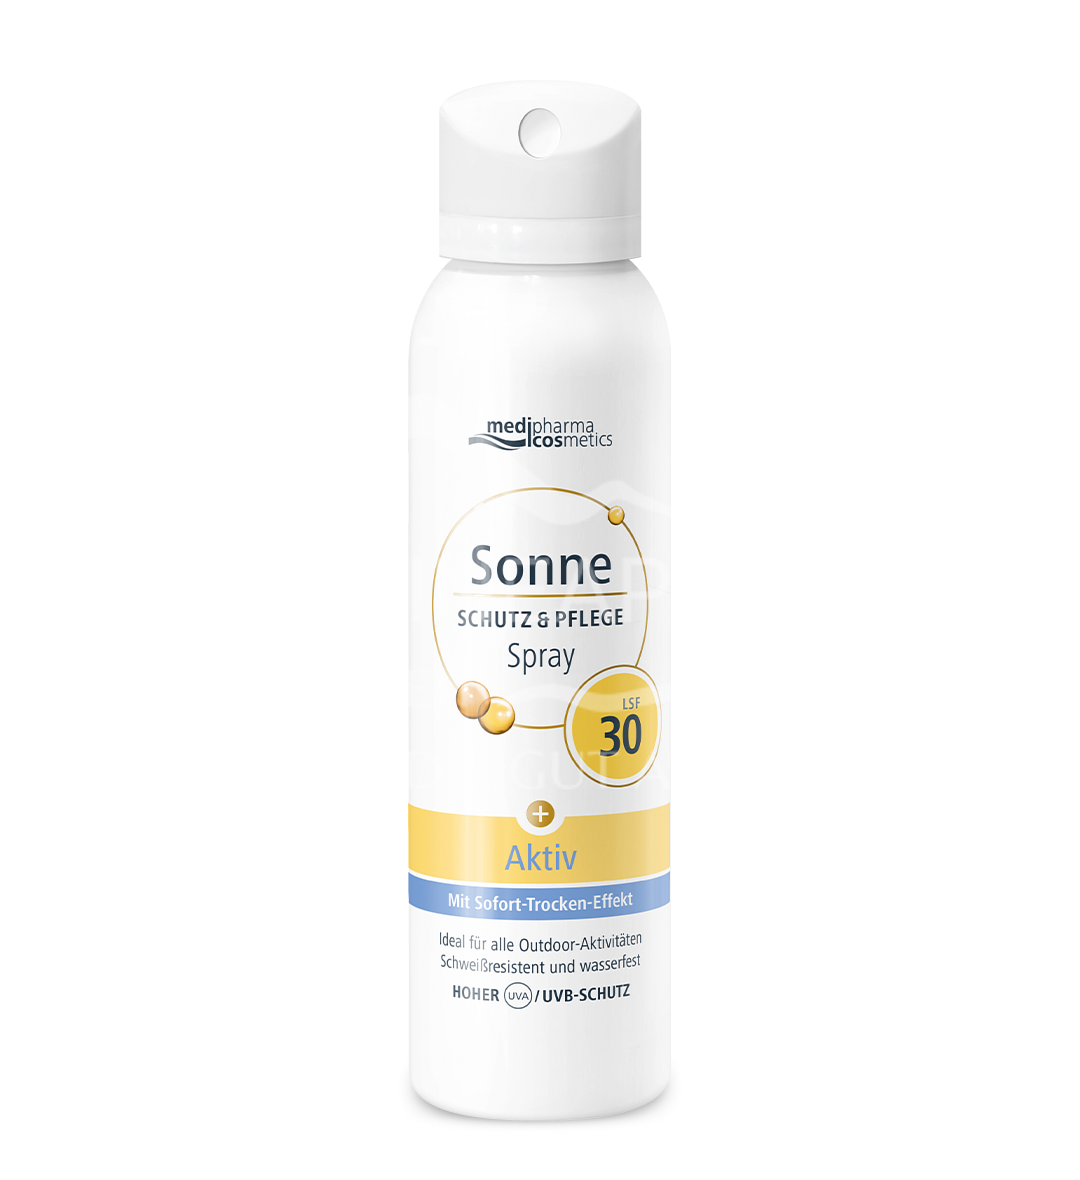 medipharma cosmetics Sonne Schutz & Pflege Aktiv Aerosol-Spray LSF 30